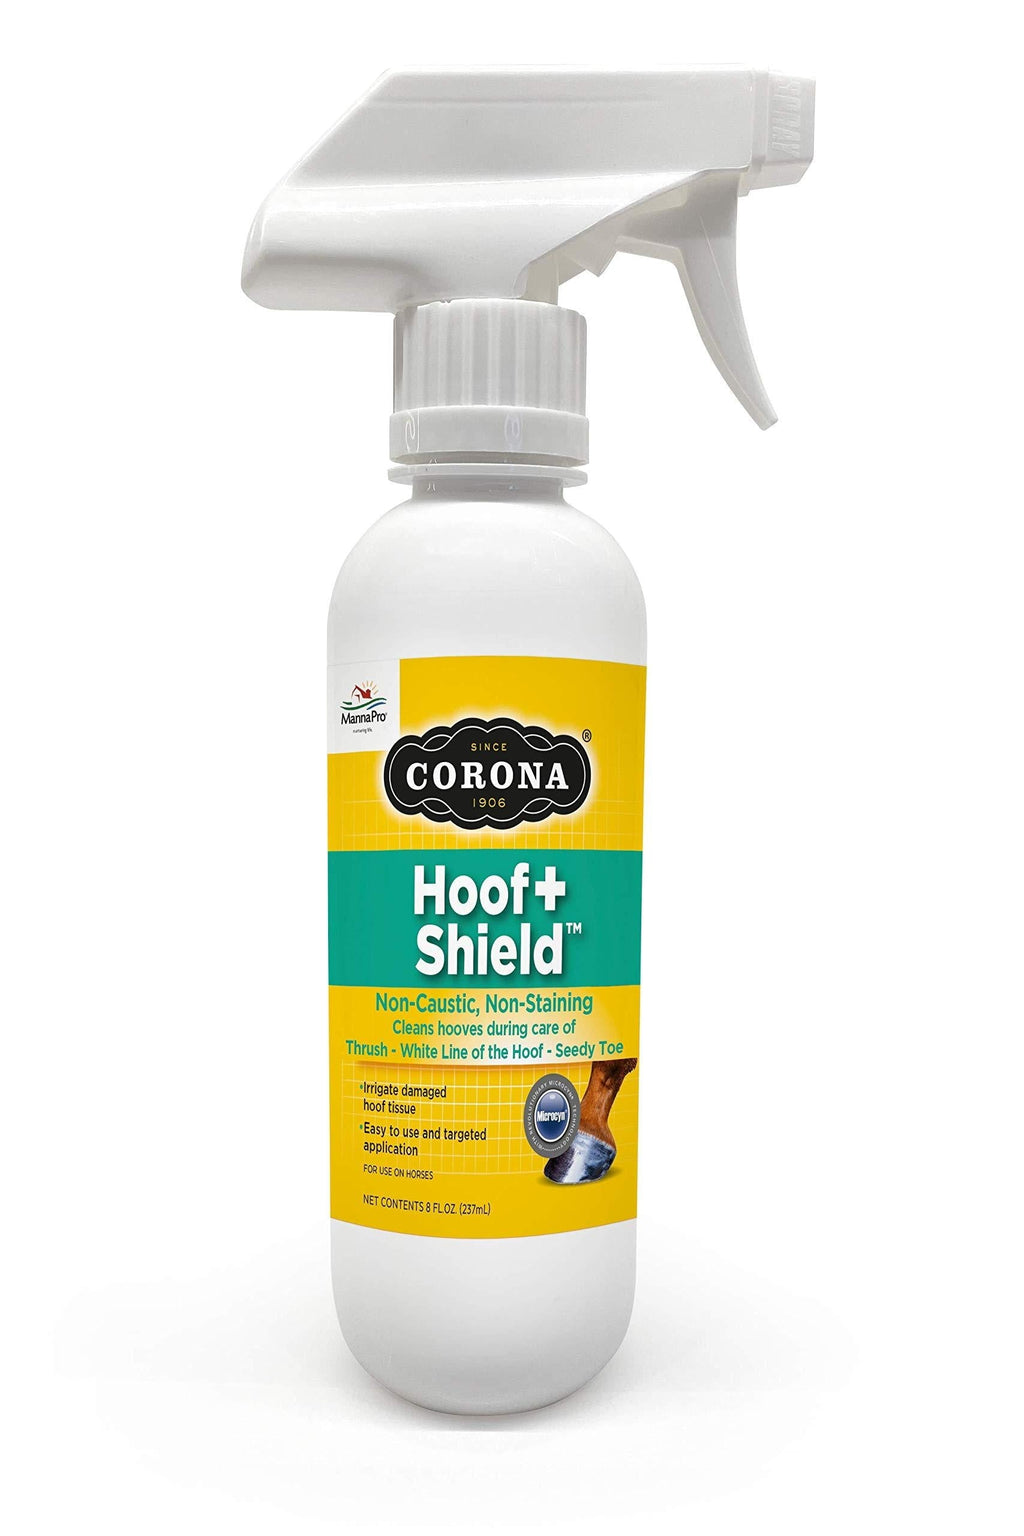 Corona Thrush + Shield Spray | Non-Caustic, Non-Staining Thrush Care for Horses | 8 Fluid Ounces - PawsPlanet Australia